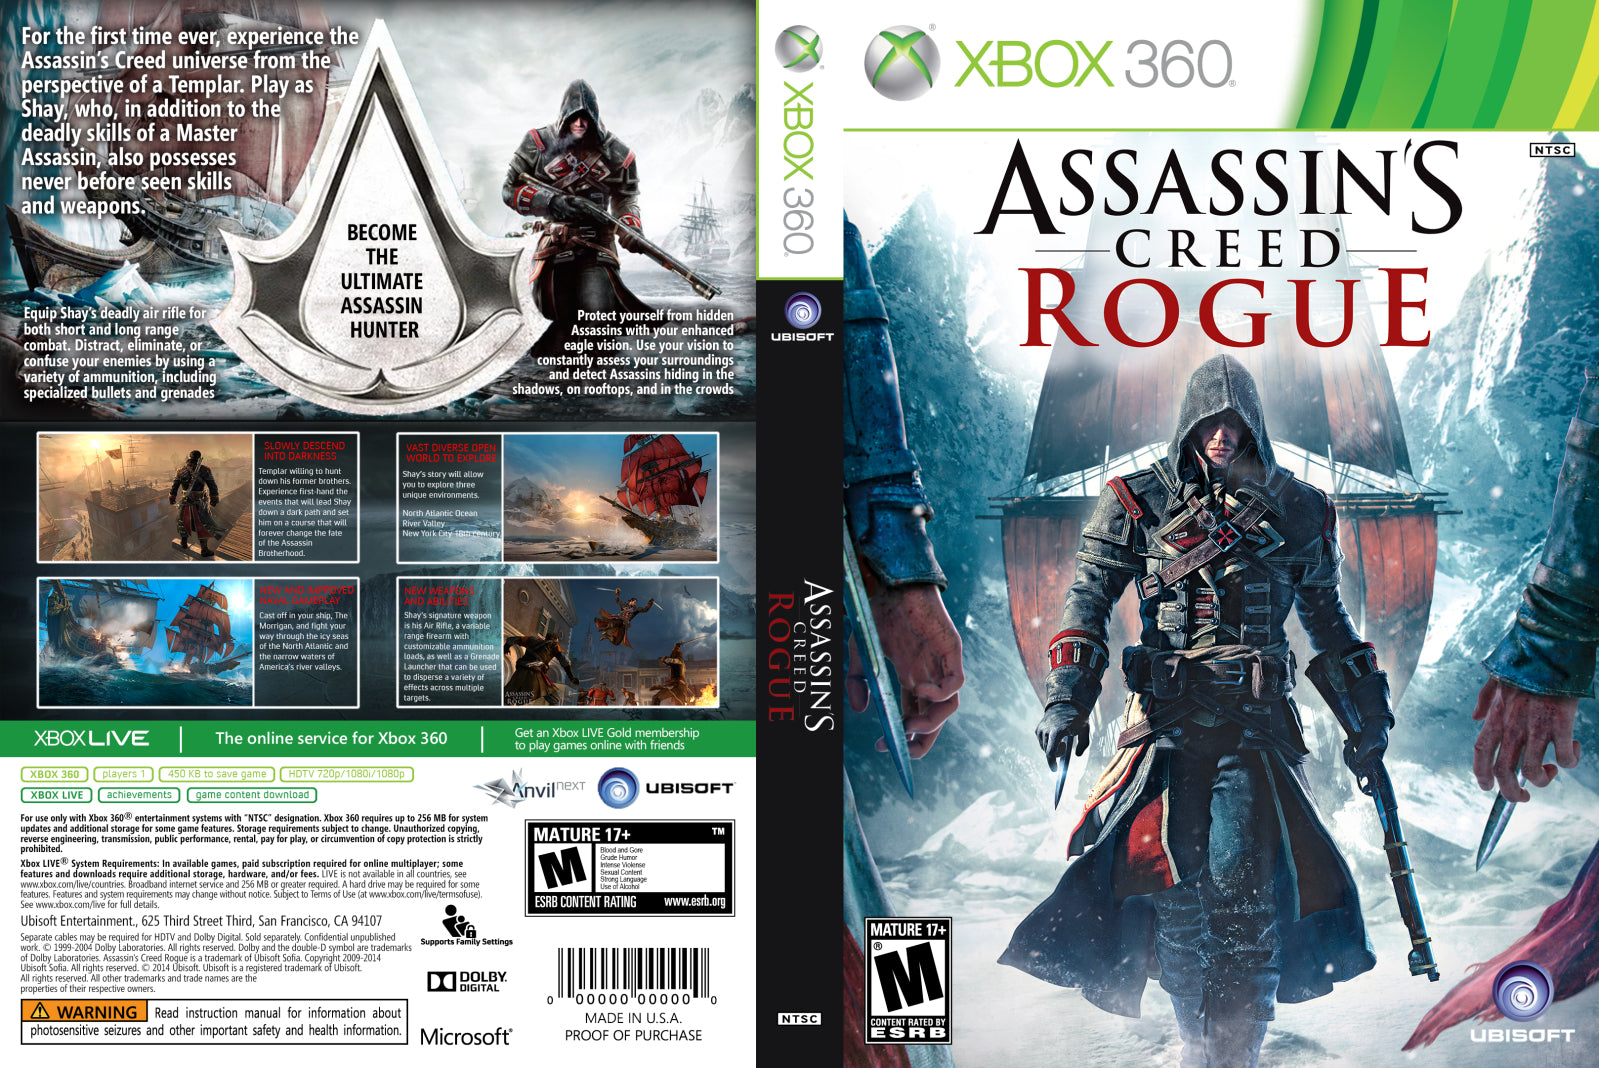 Assassin's Creed: Rogue headed to PS3, Xbox 360 this November